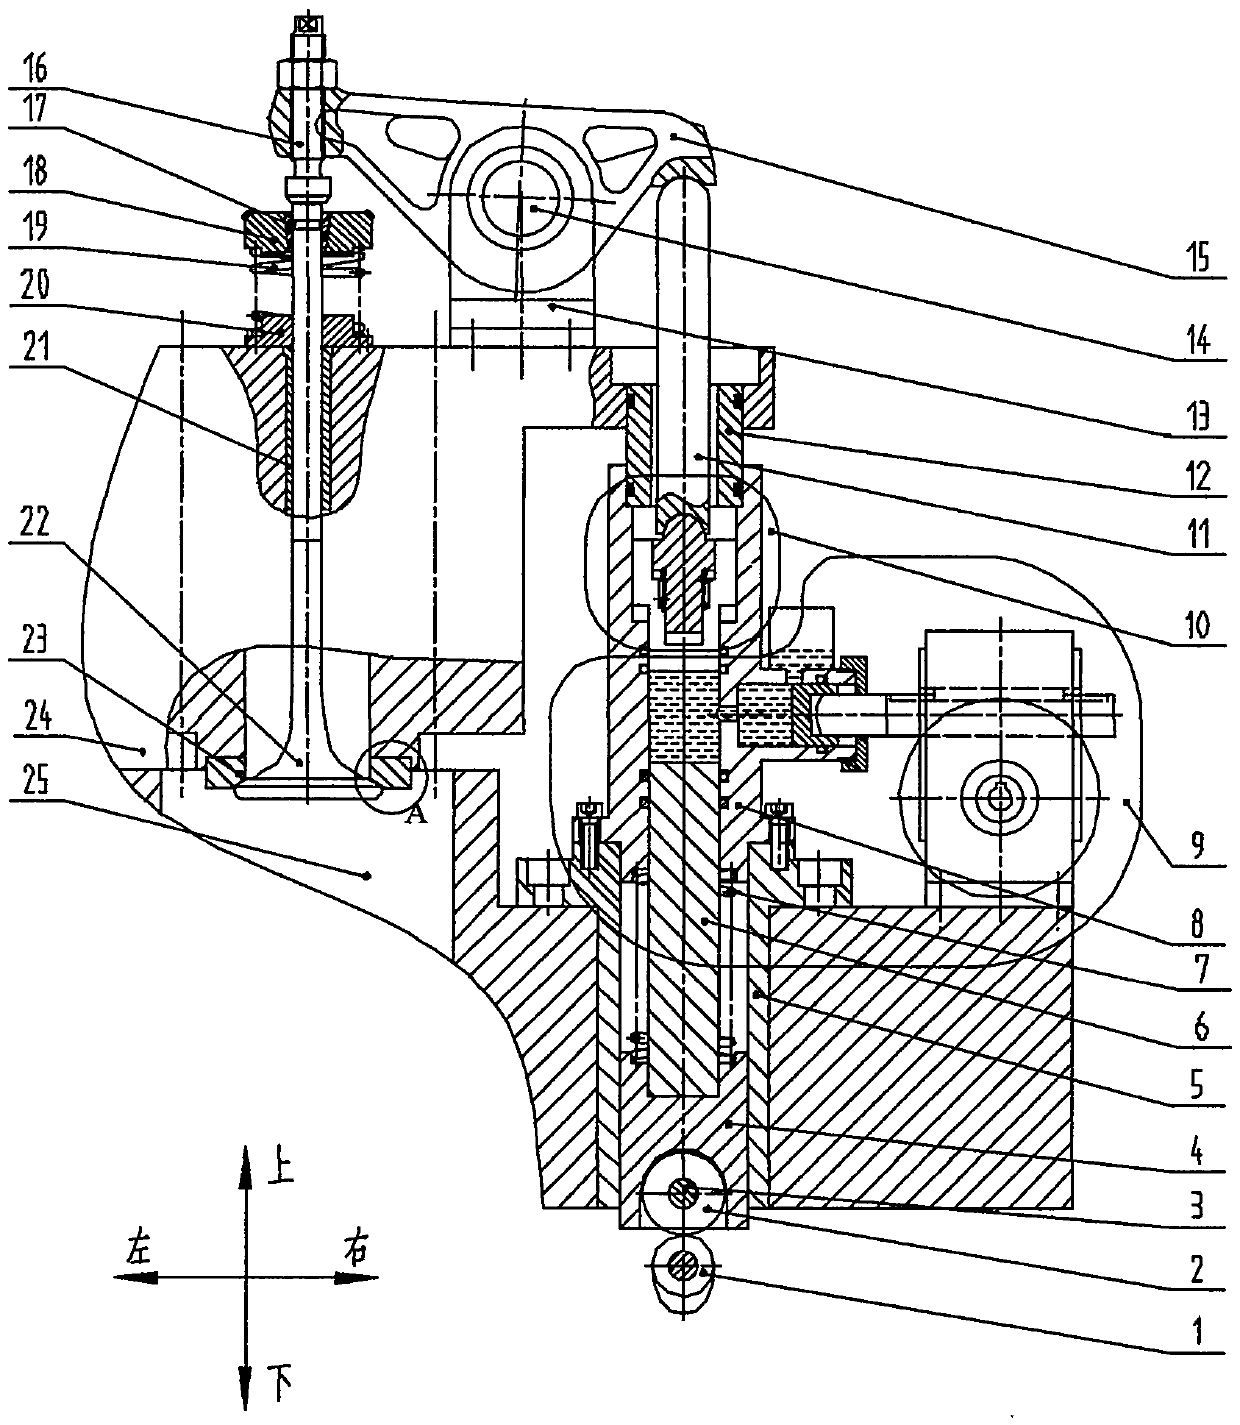 Internal combustion engine hydraulic valve lift adjustment buffer device